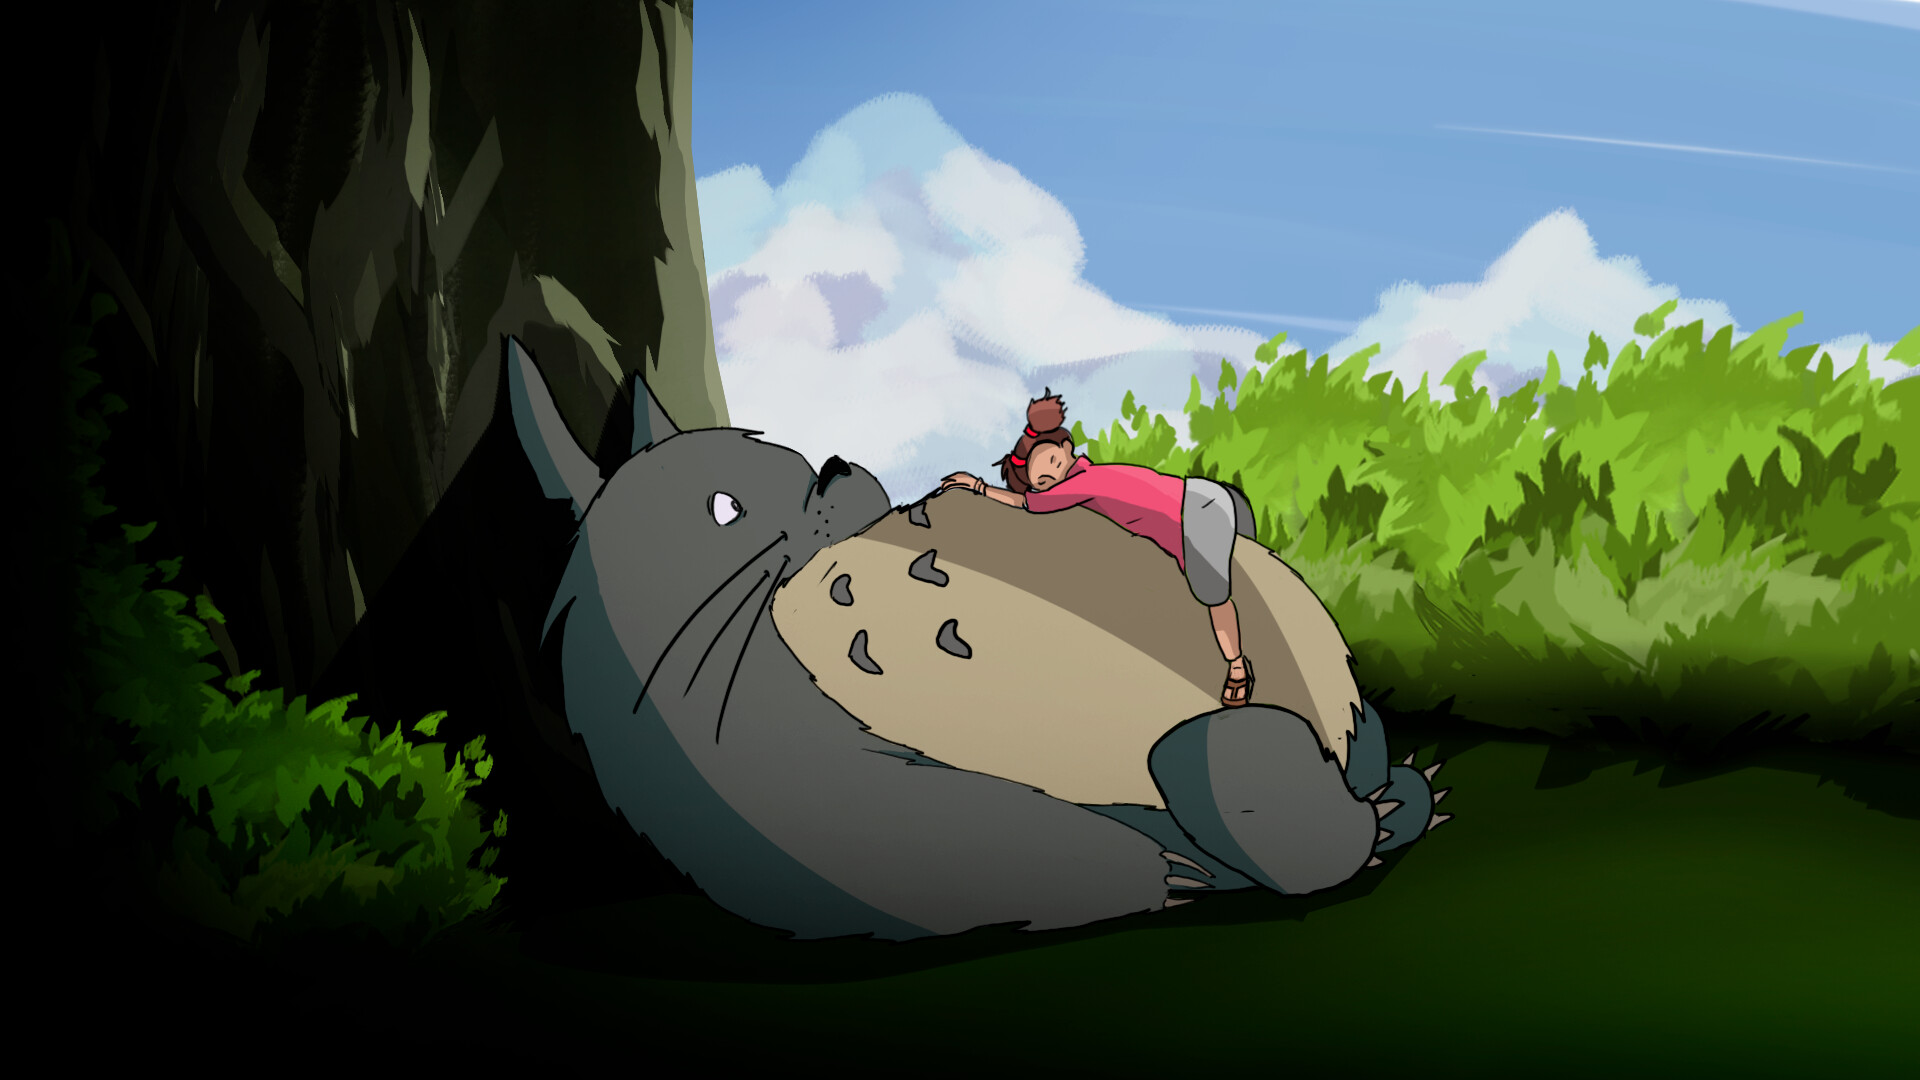 I just saw the movie "My Neighbor Totoro"